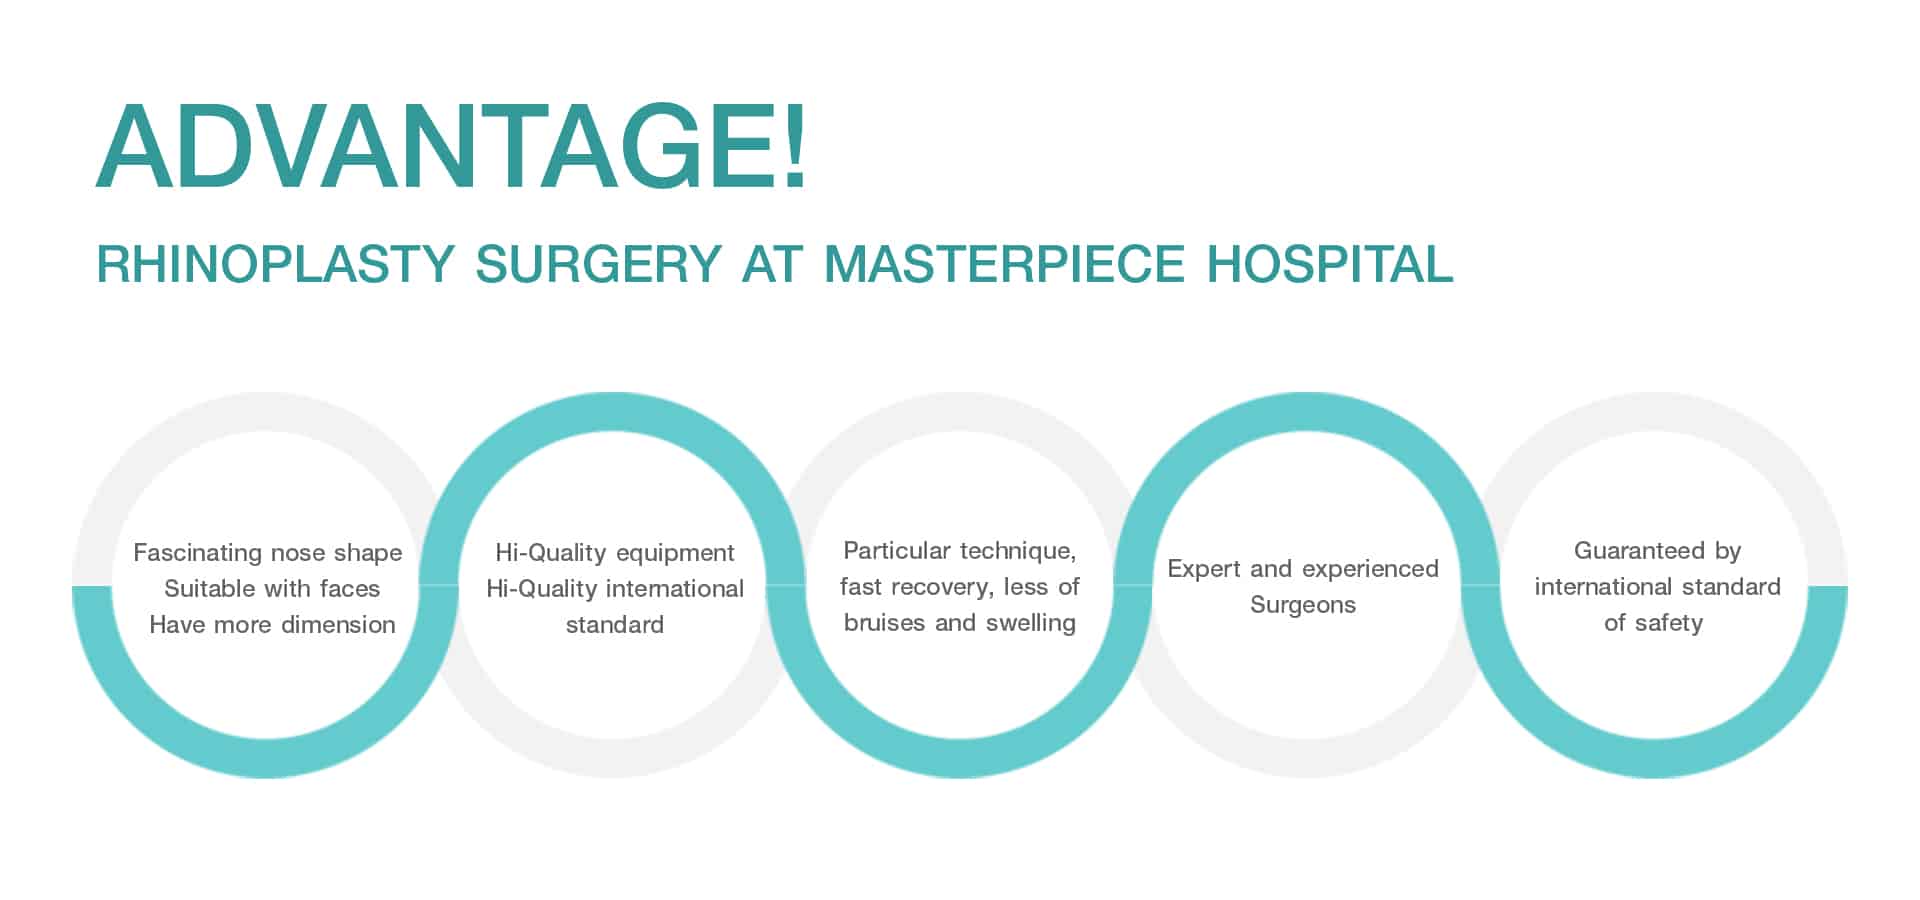 Rhinoplasty surgery at Masterpiece Hospital